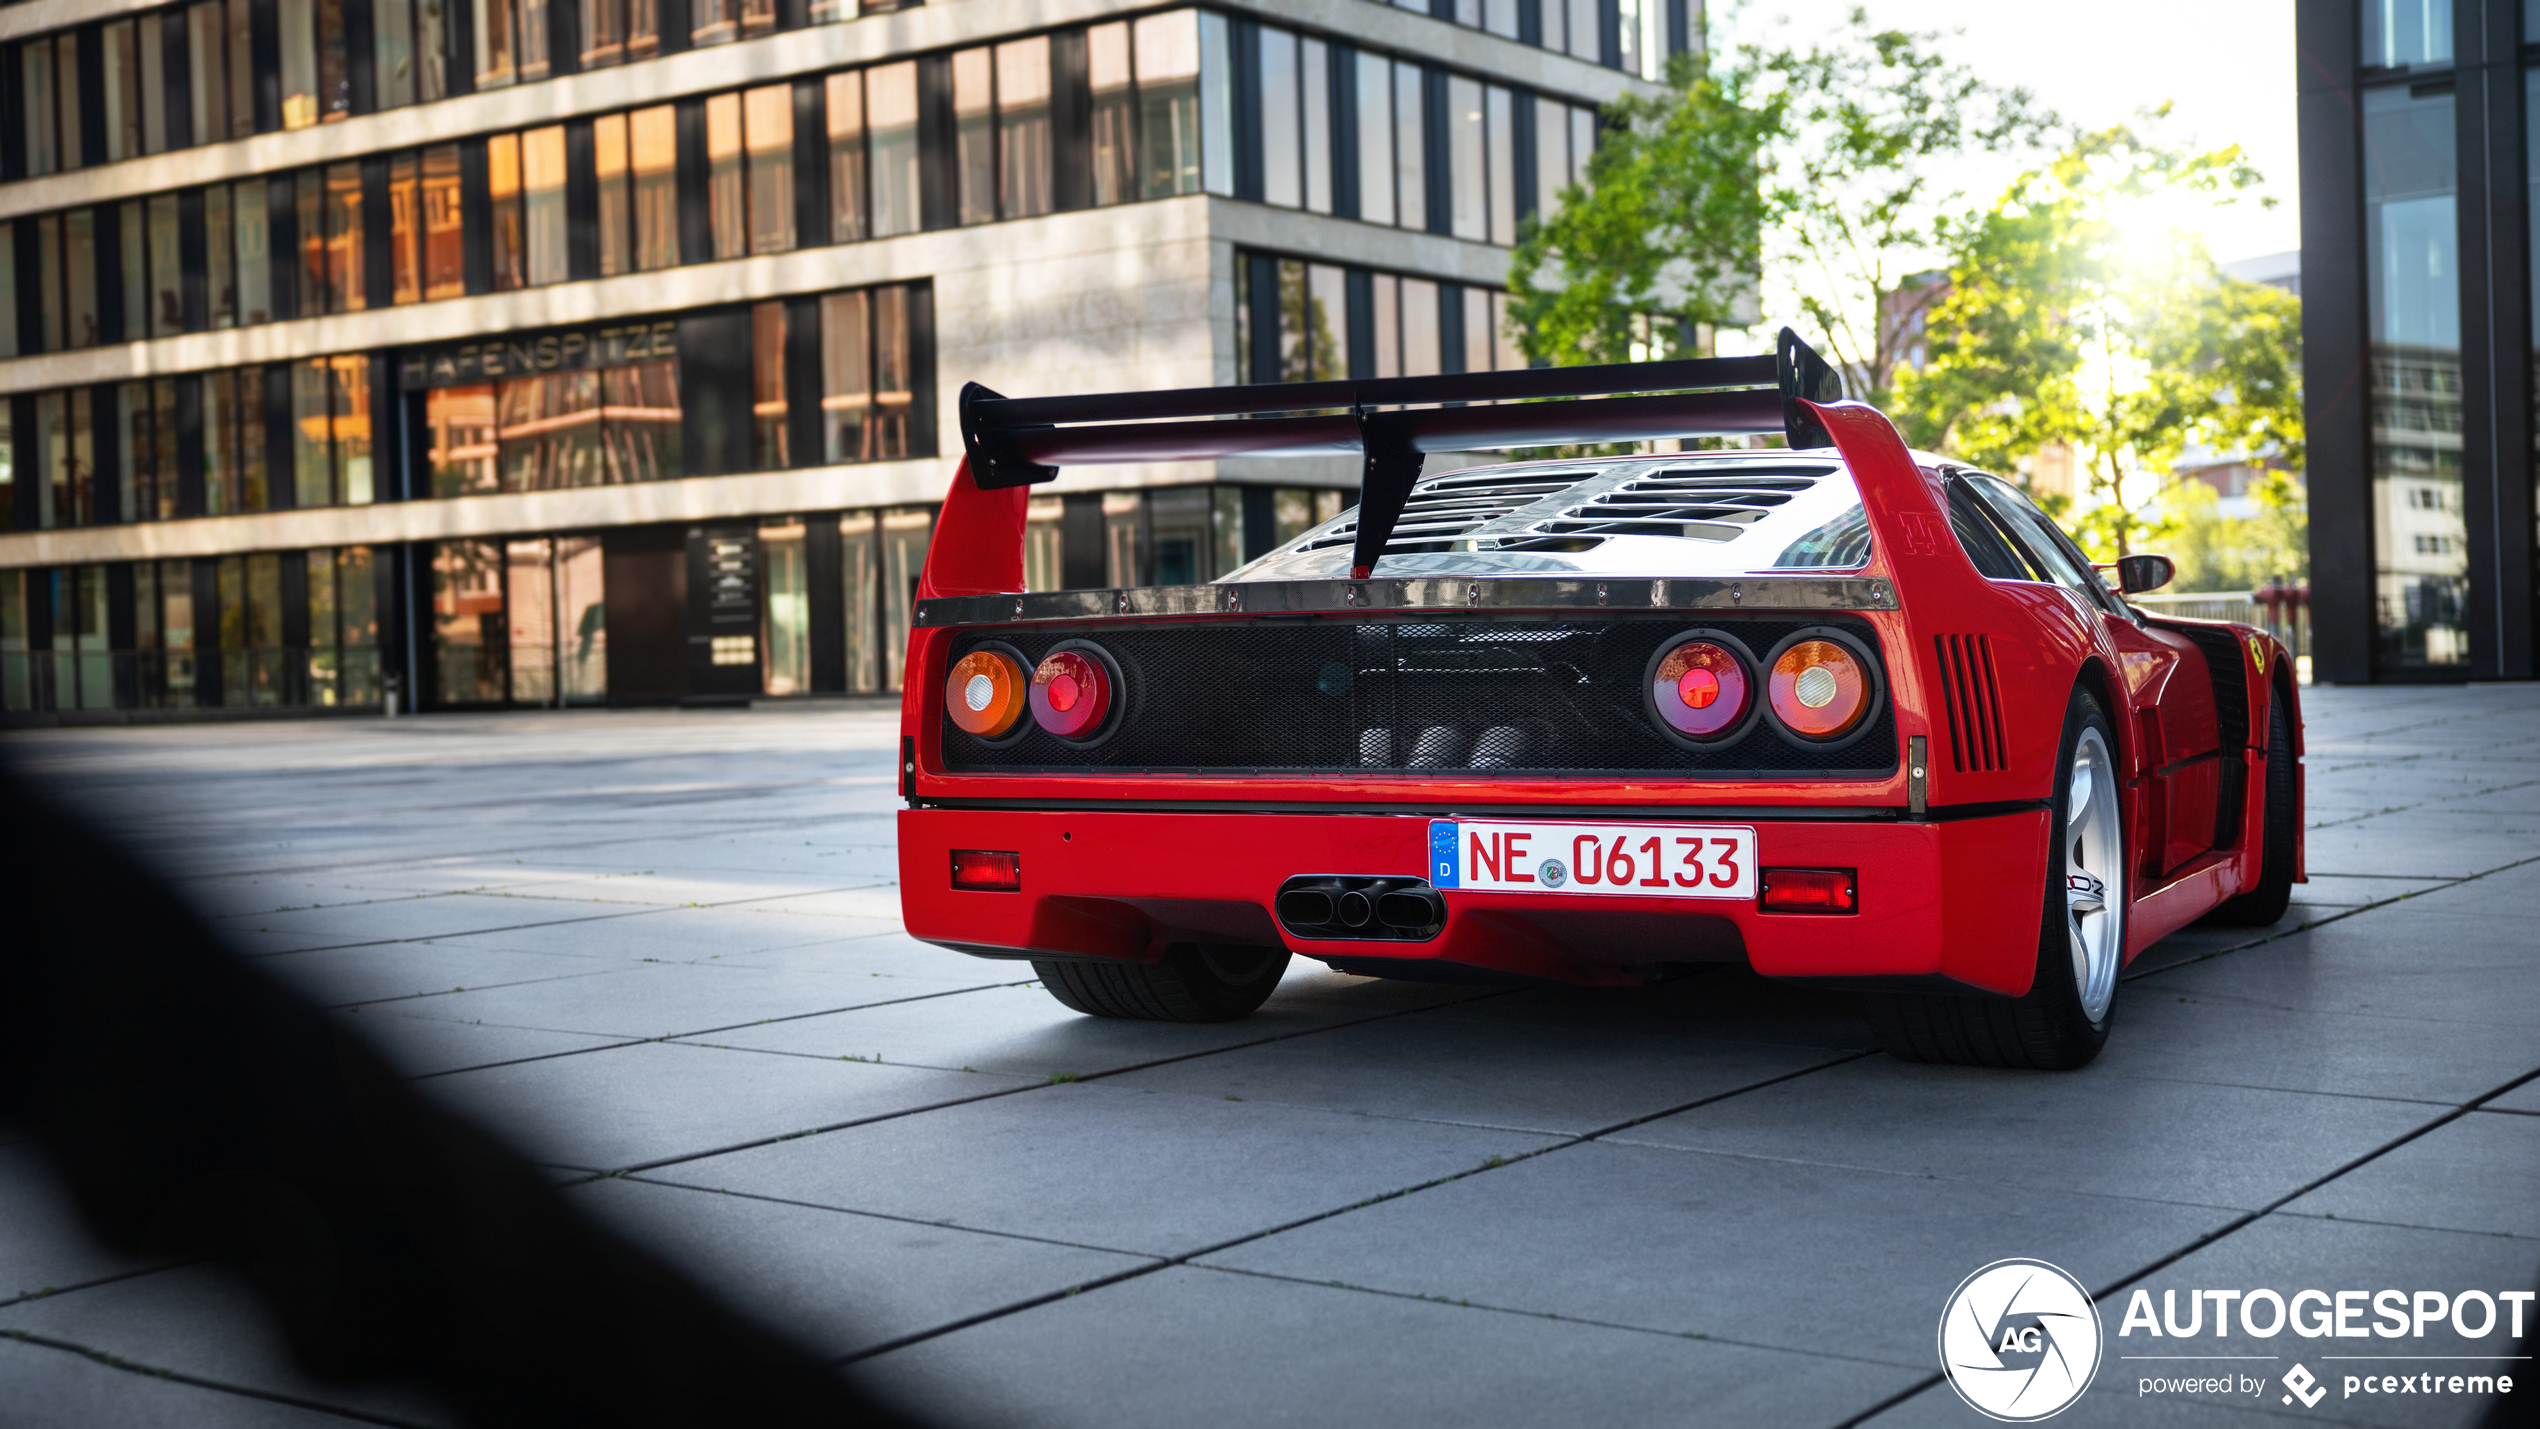 Extremely rare Ferrari shows up in Düsseldorf